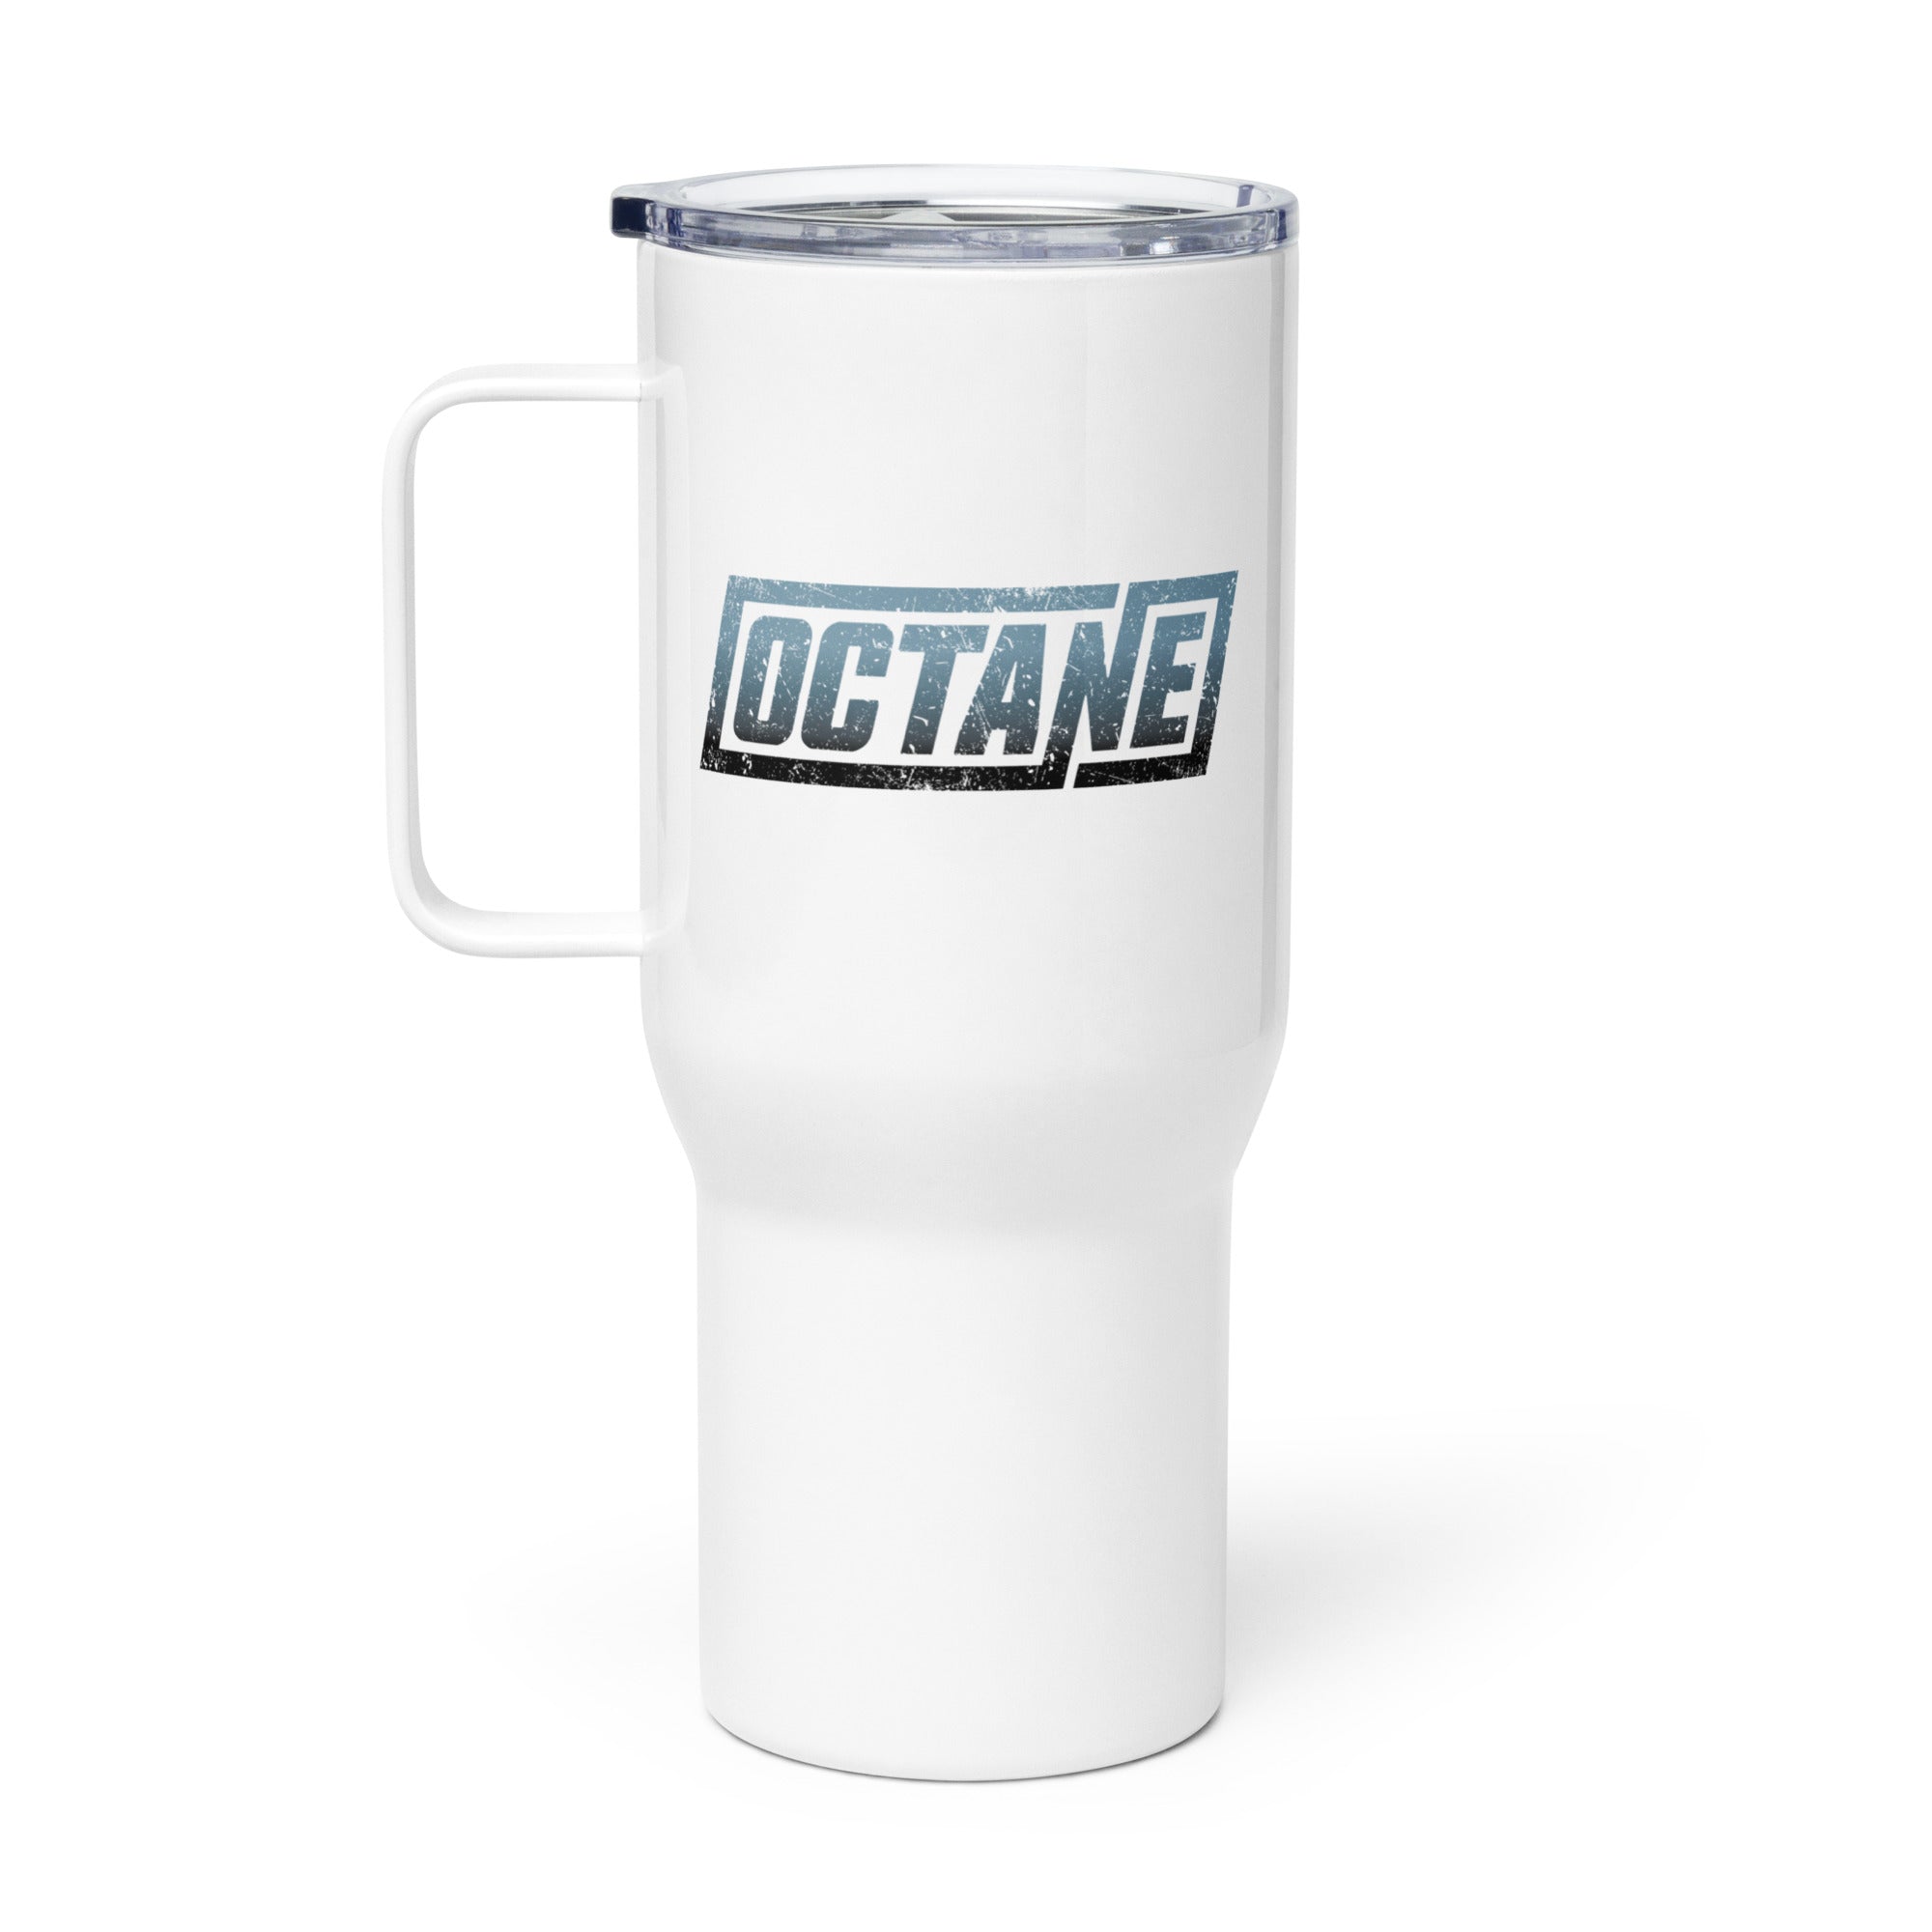 Octane: Travel Mug